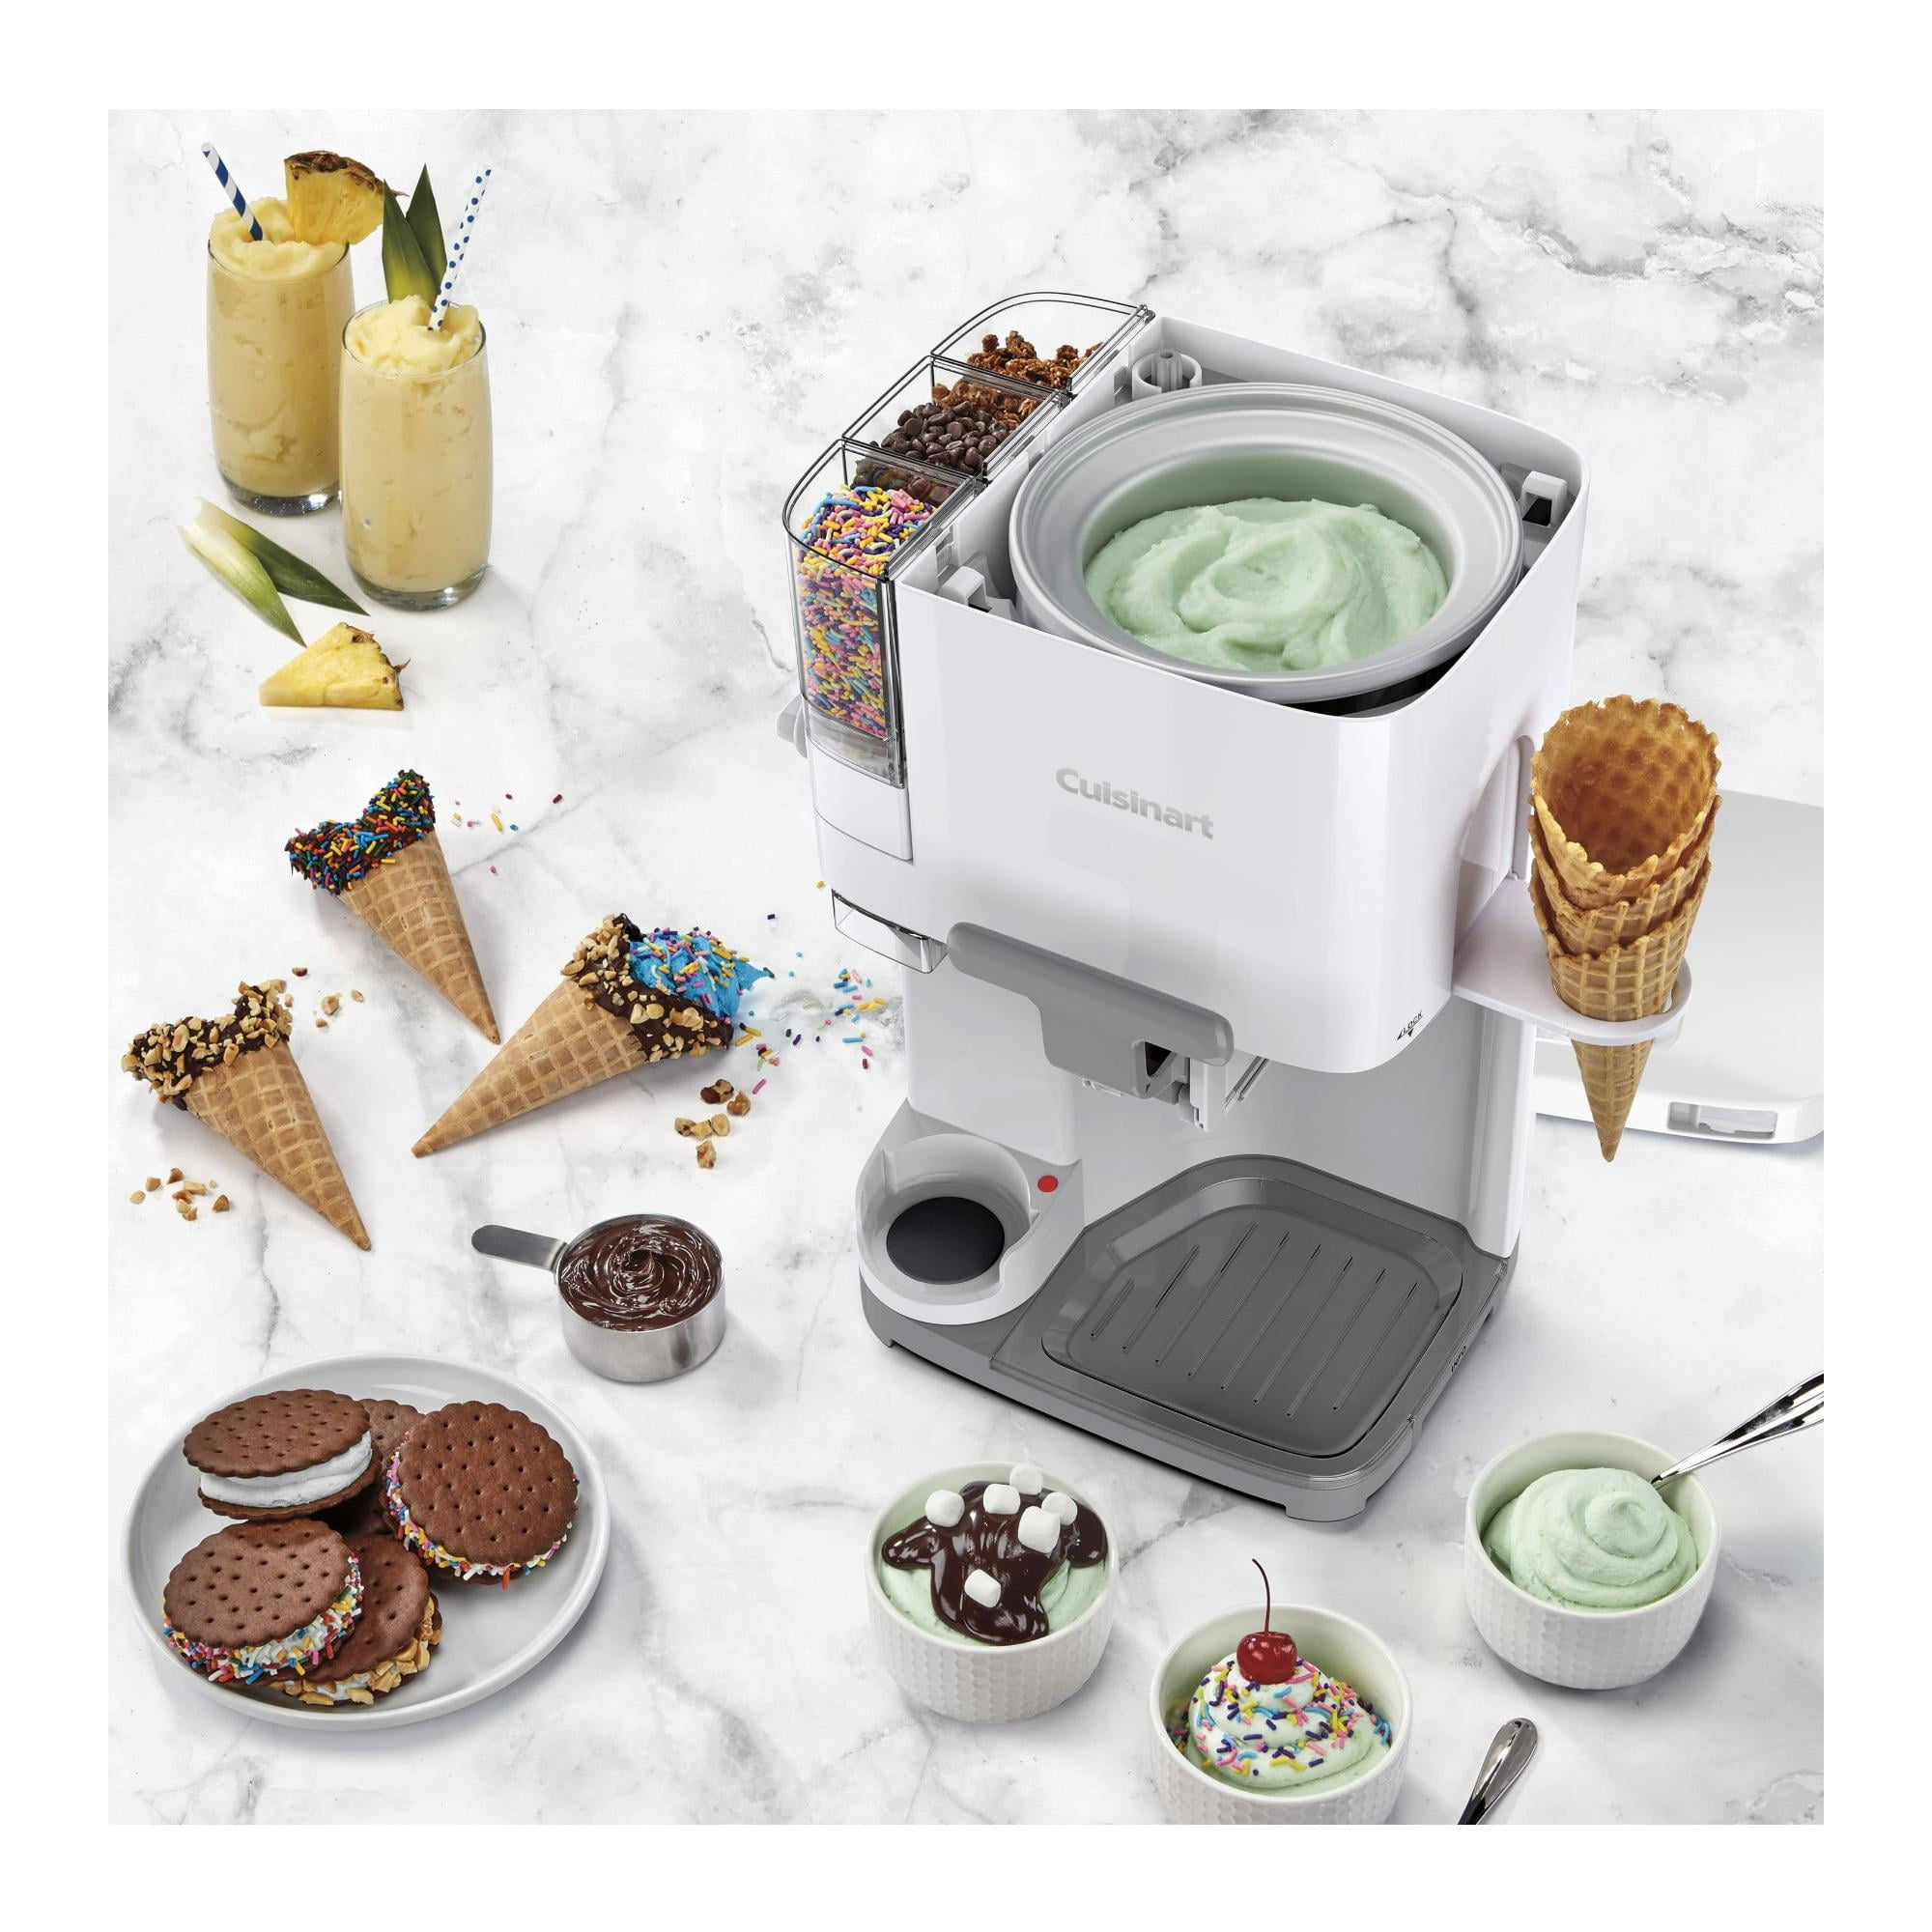 Cuisinart The Soft Serve Ice Cream Maker - Buy Online - Heathcotes